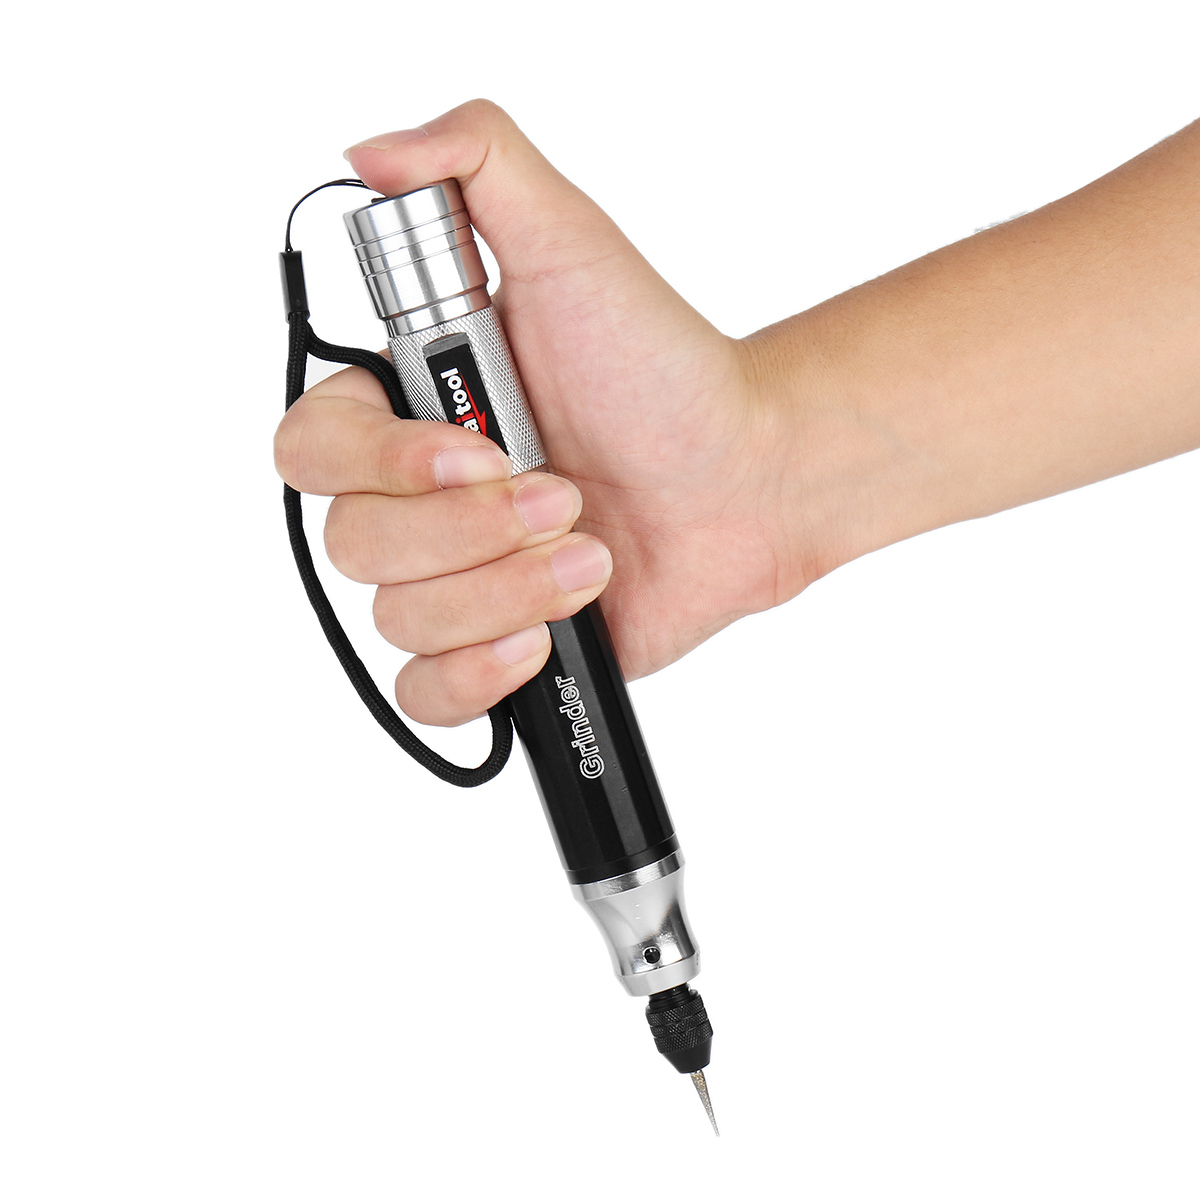 Raitool™ 3.7V 35W Mini Power Drills Electric Grinder Cordless Engraving Pen 14